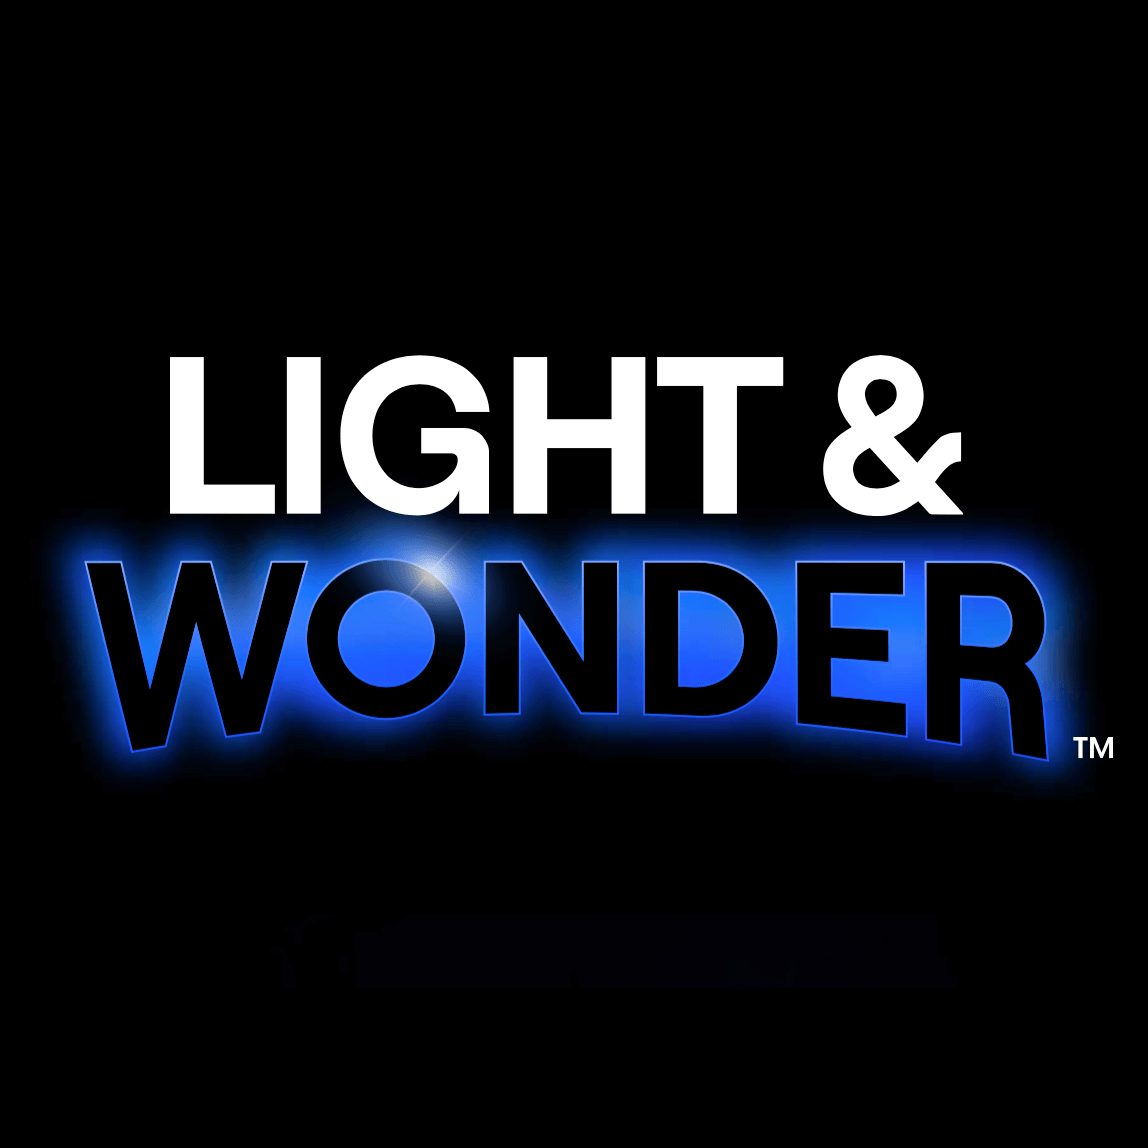 Congratulations Light & Wonder on the Successful Rebrand